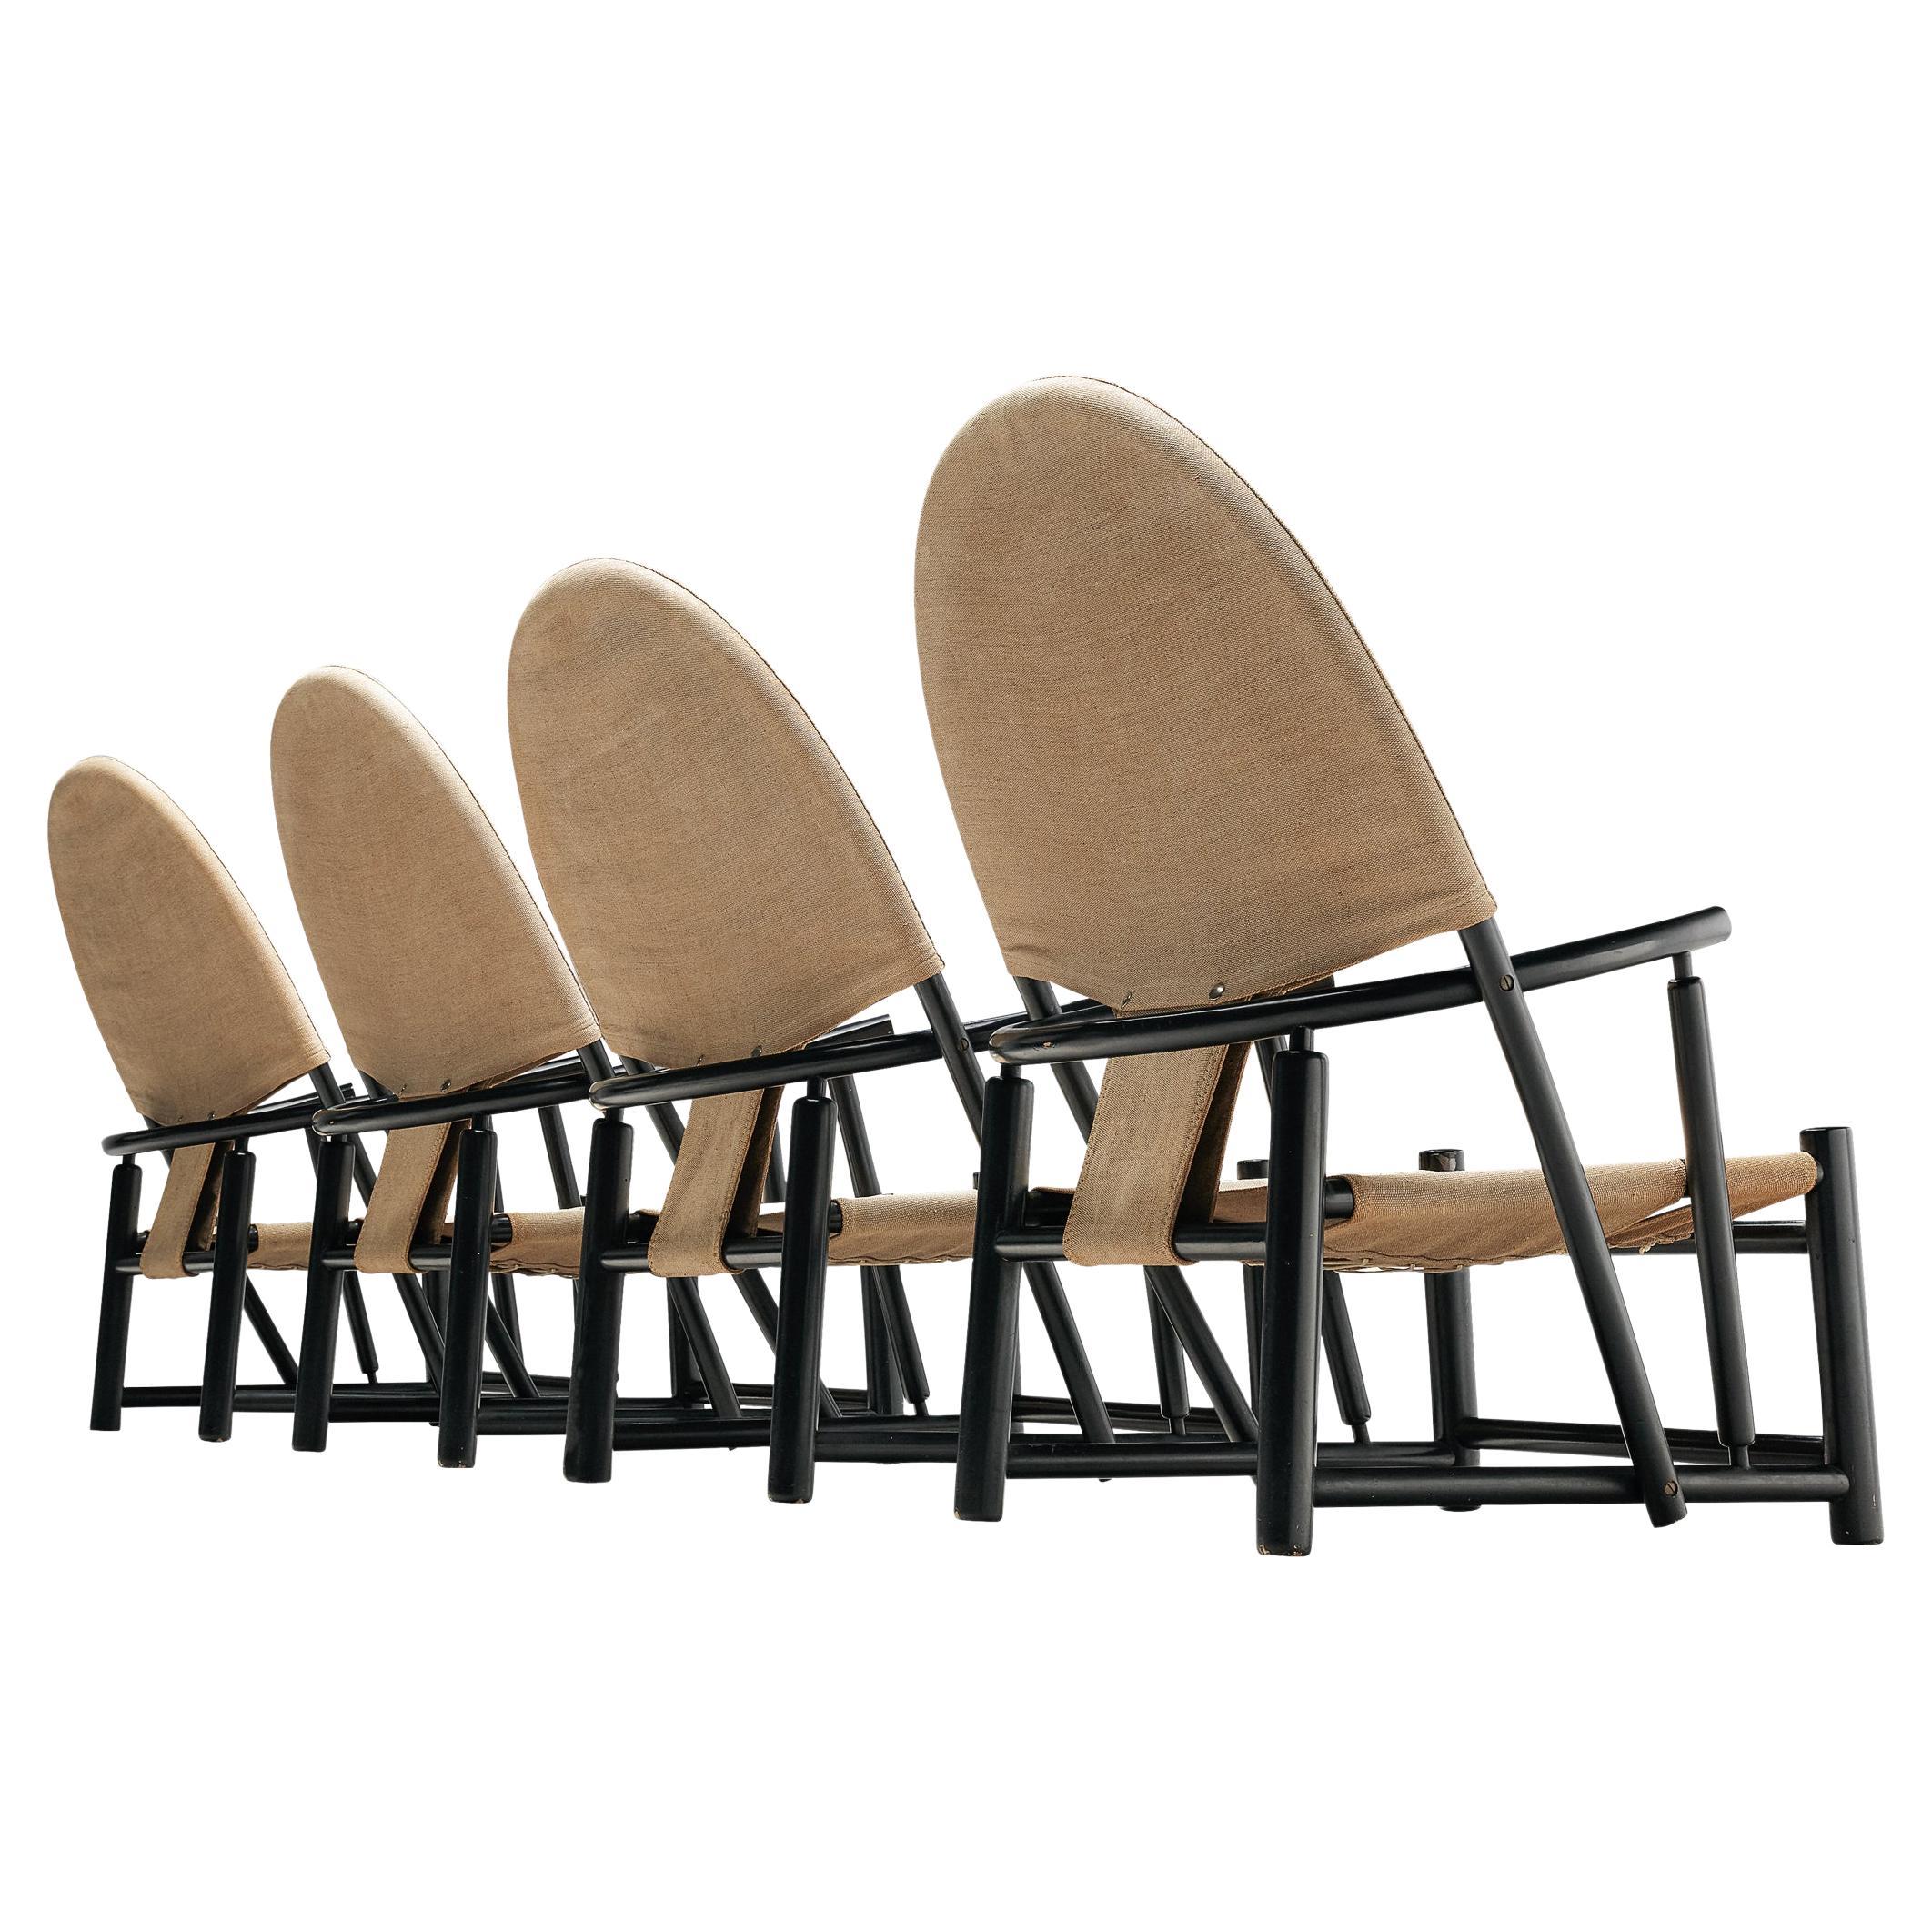 Werther Toffoloni & Piero Palange ‘Hoop’ Lounge Chairs